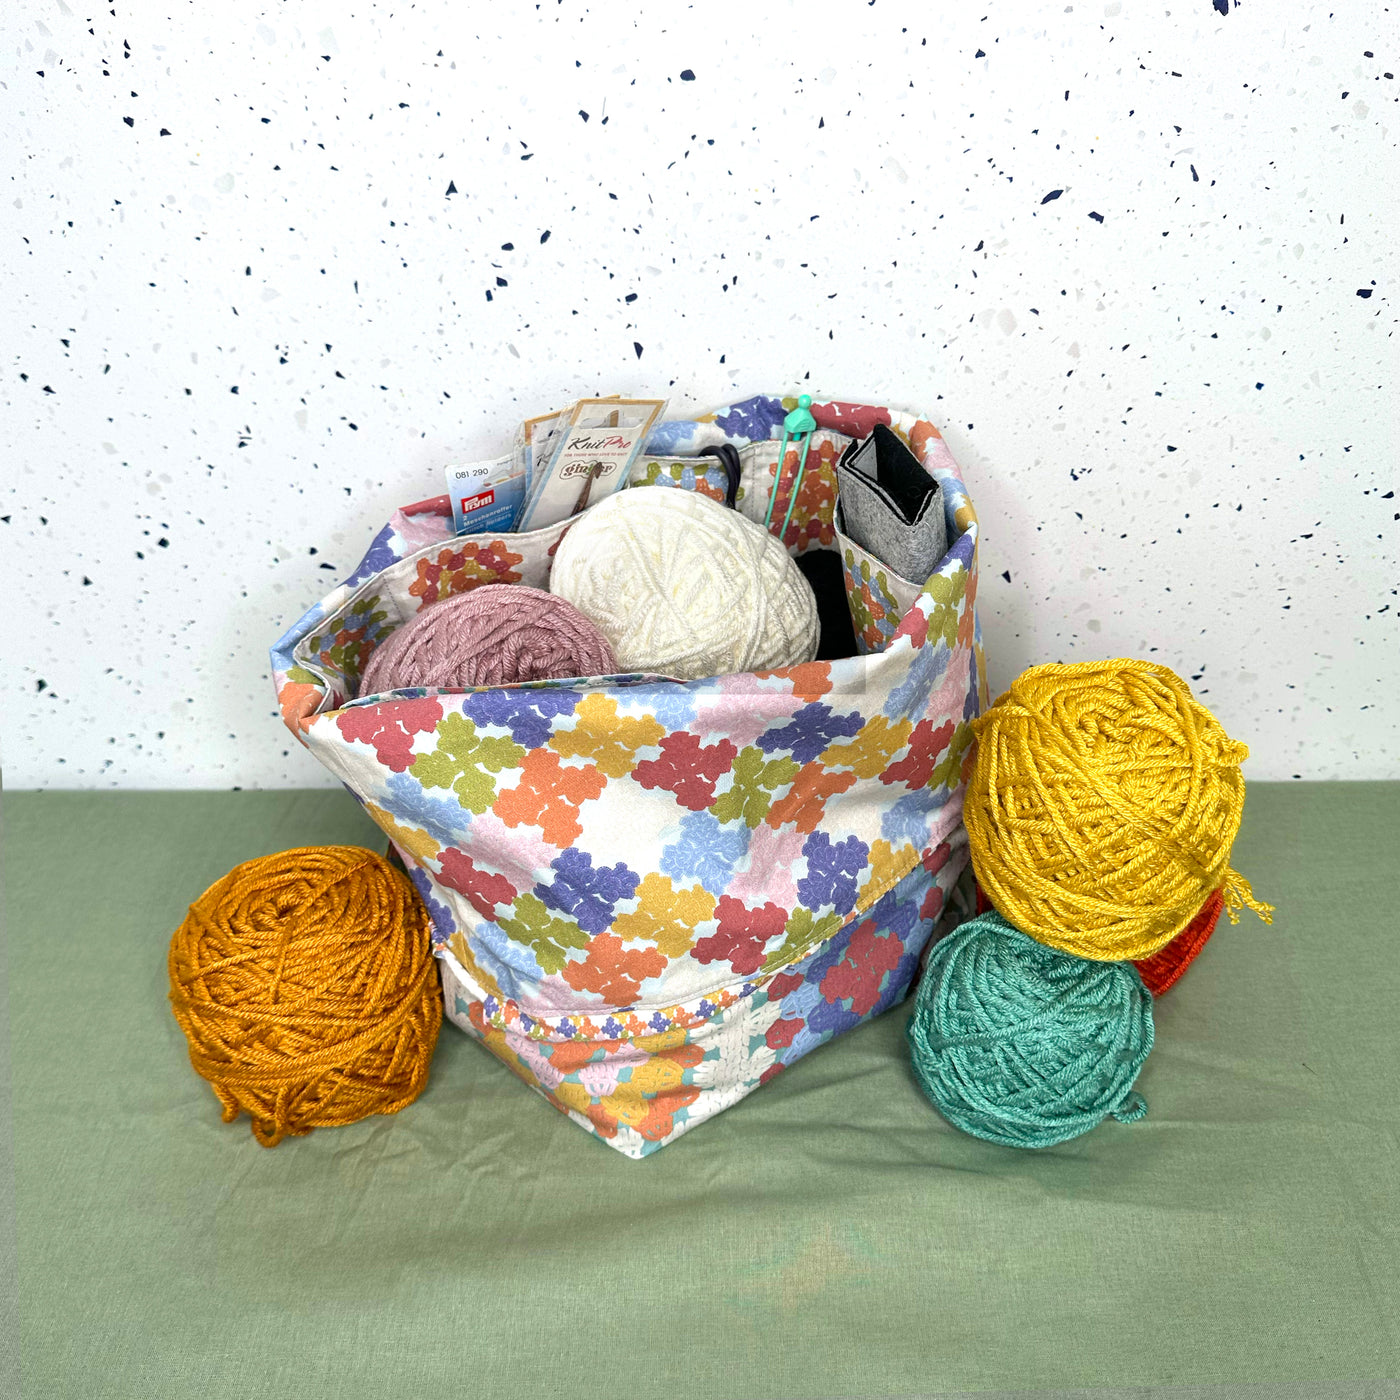 The Crochet Duffle Tote Kit